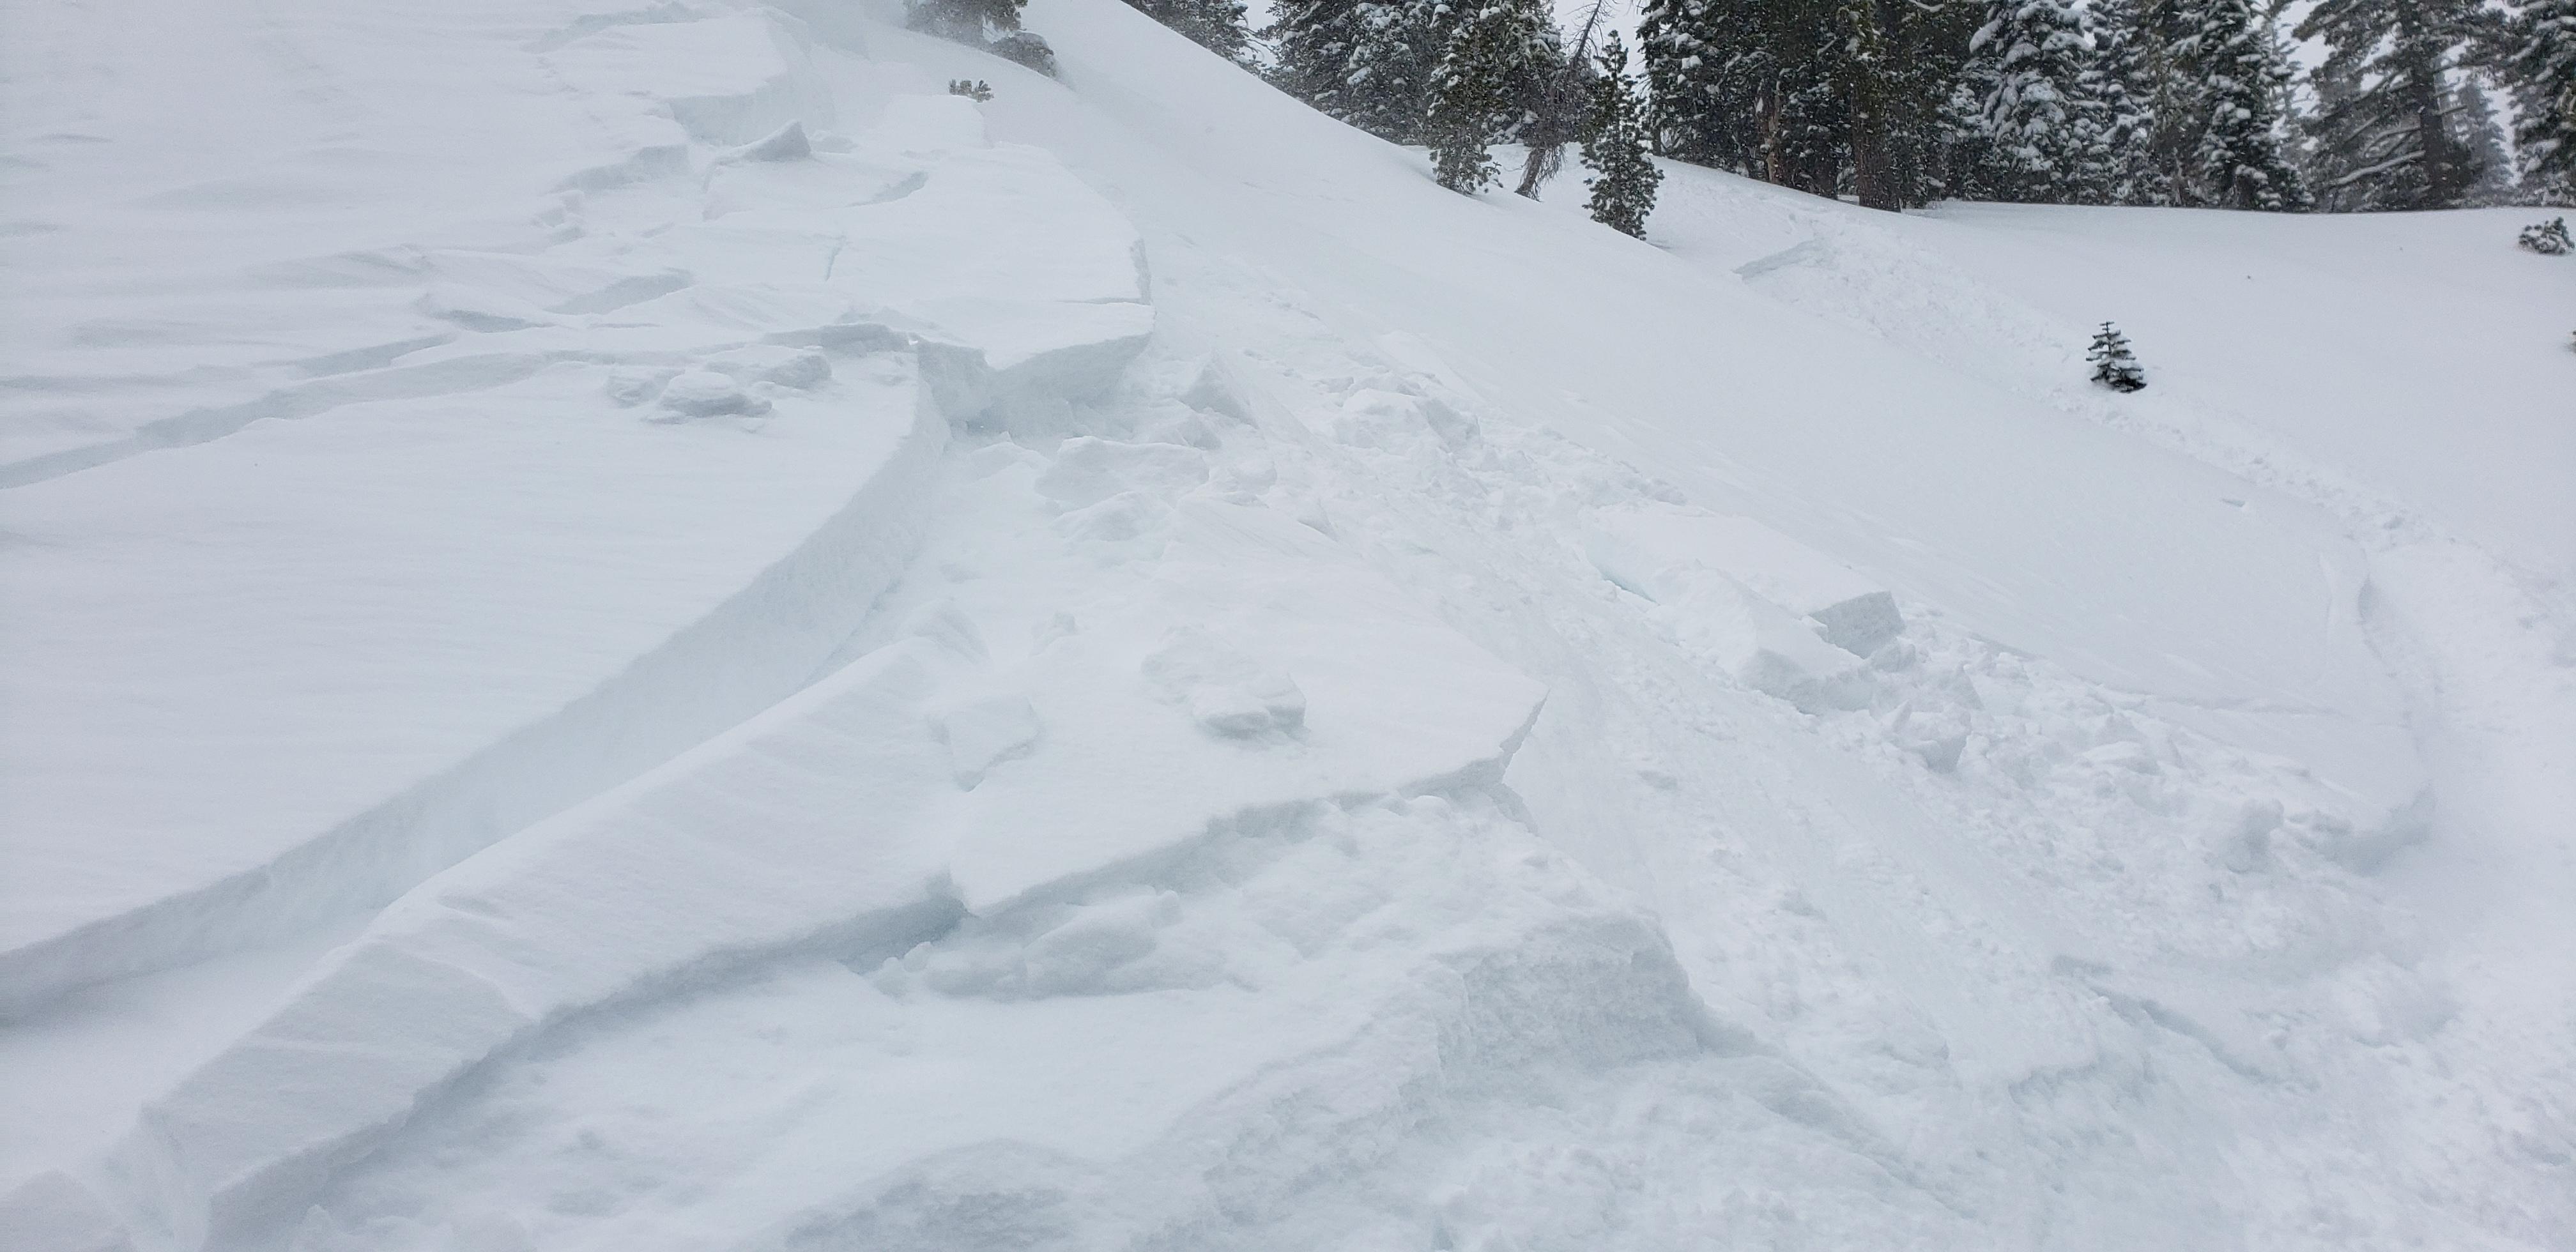 Ski cut triggered avalanche | Sierra Avalanche Center